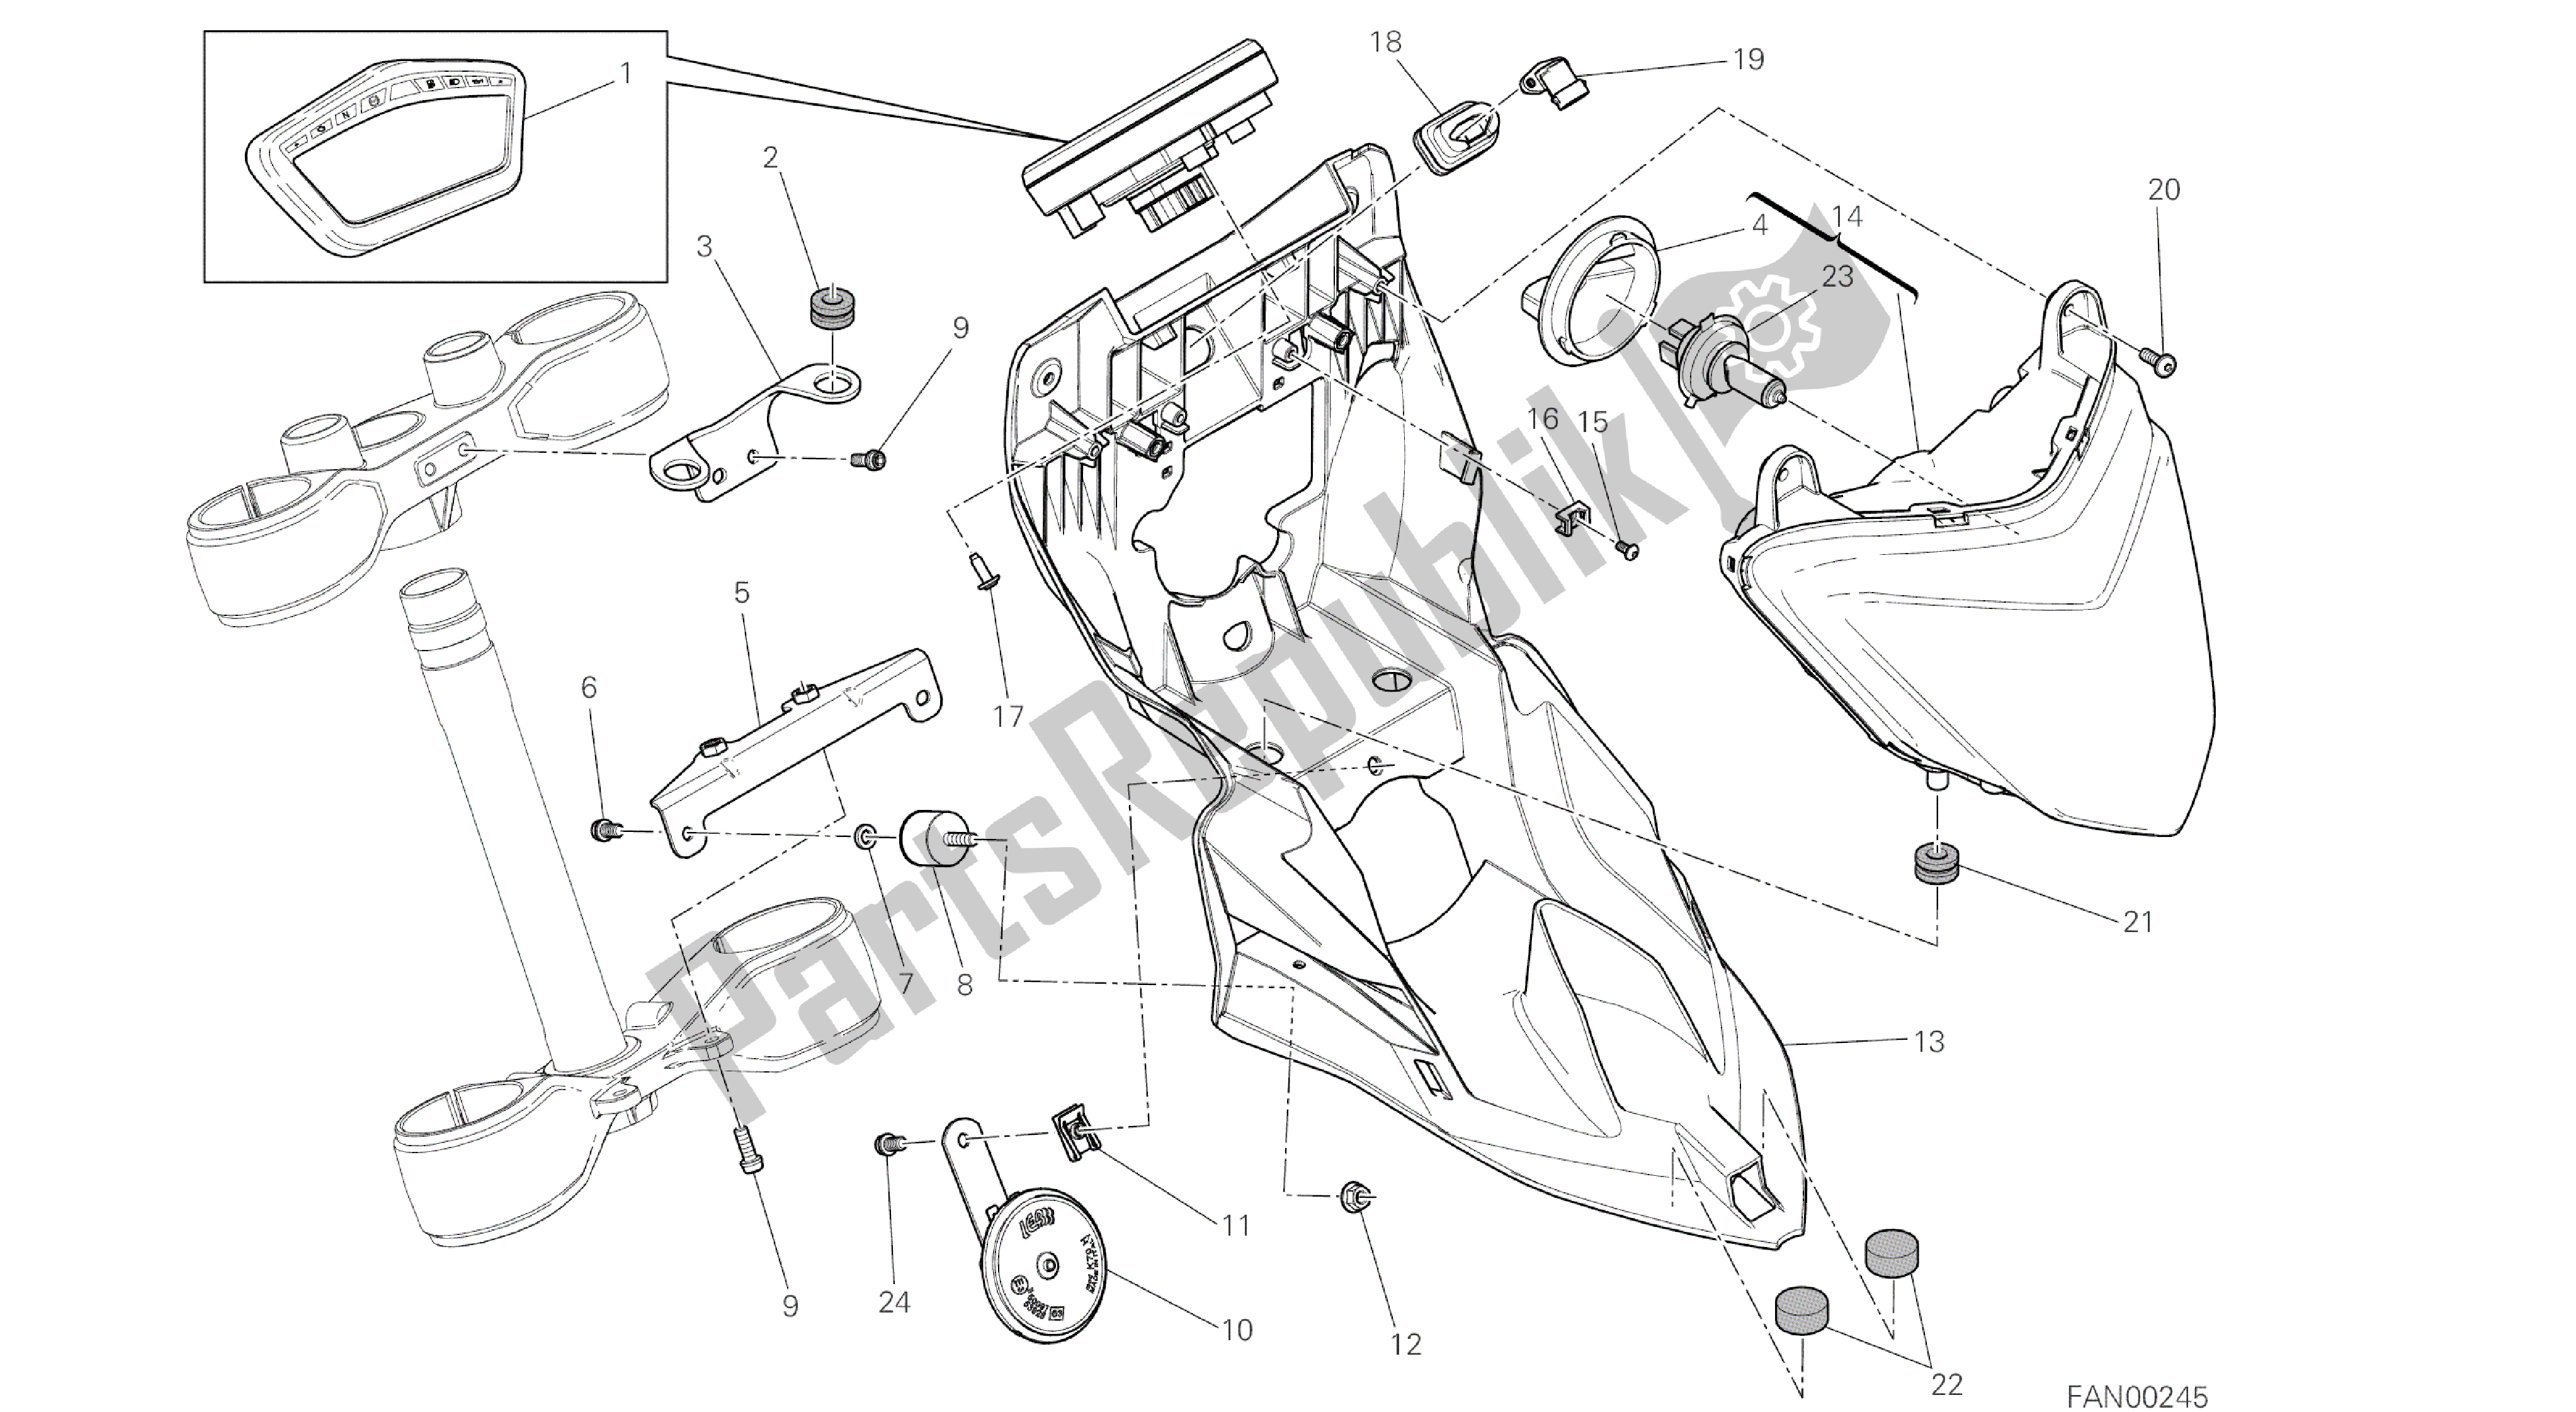 Alle onderdelen voor de Tekening 020 - Fanale Anteriore E Cruscotto [mod: Hypstr; Xst: Aus, Chn, Eur, Fra, Jap, Tha, Twn] Group Electric van de Ducati Hypermotard 821 2014